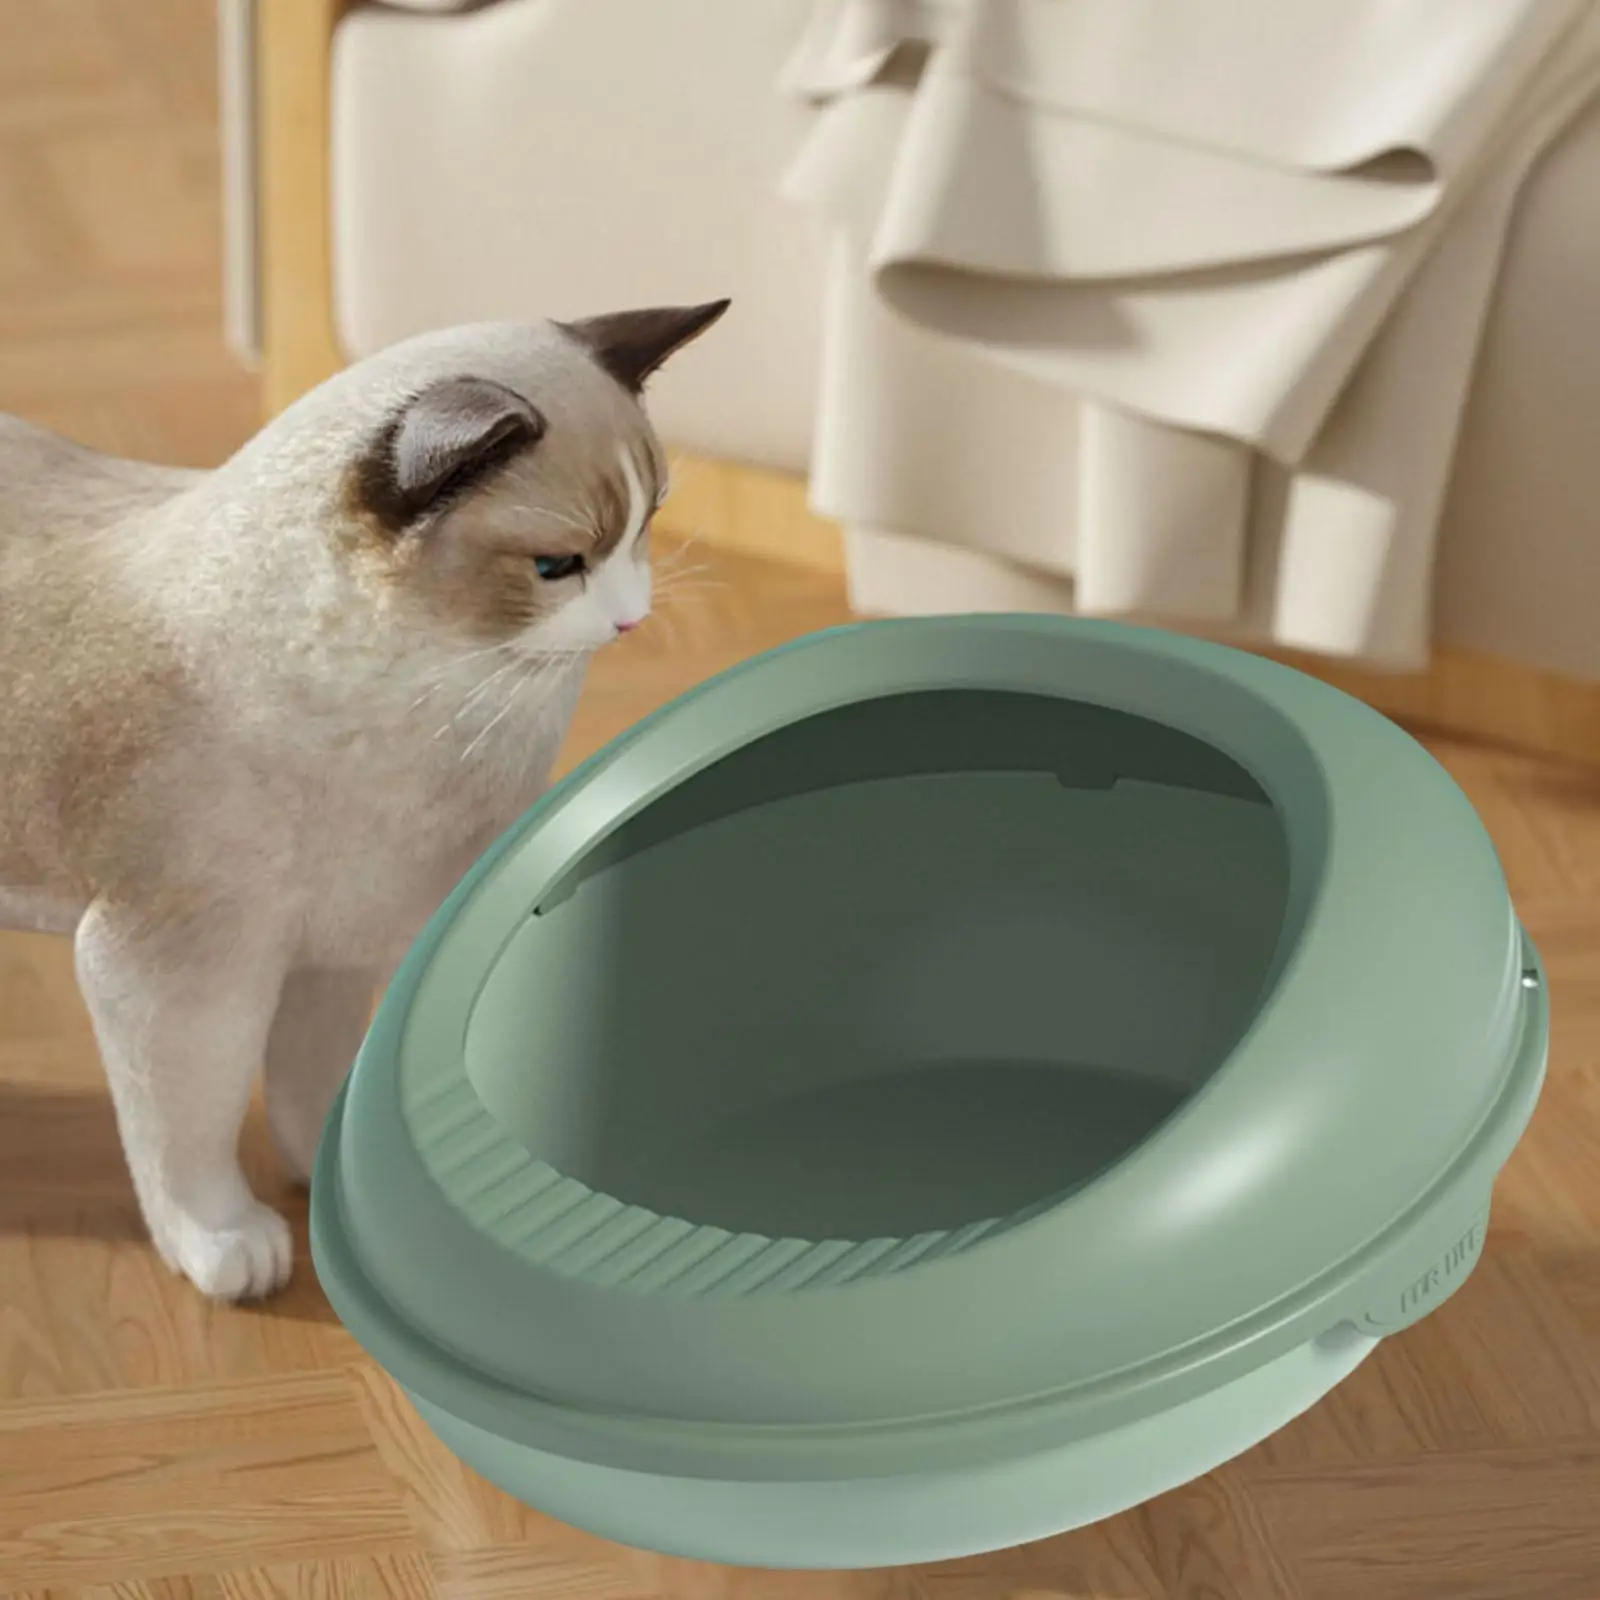 Large Open Cats Litter Box, High Sided Litter Pan, Litter Prevents Leakage, Semi Enclosed Cat Litter Toilet for Kittens Cats